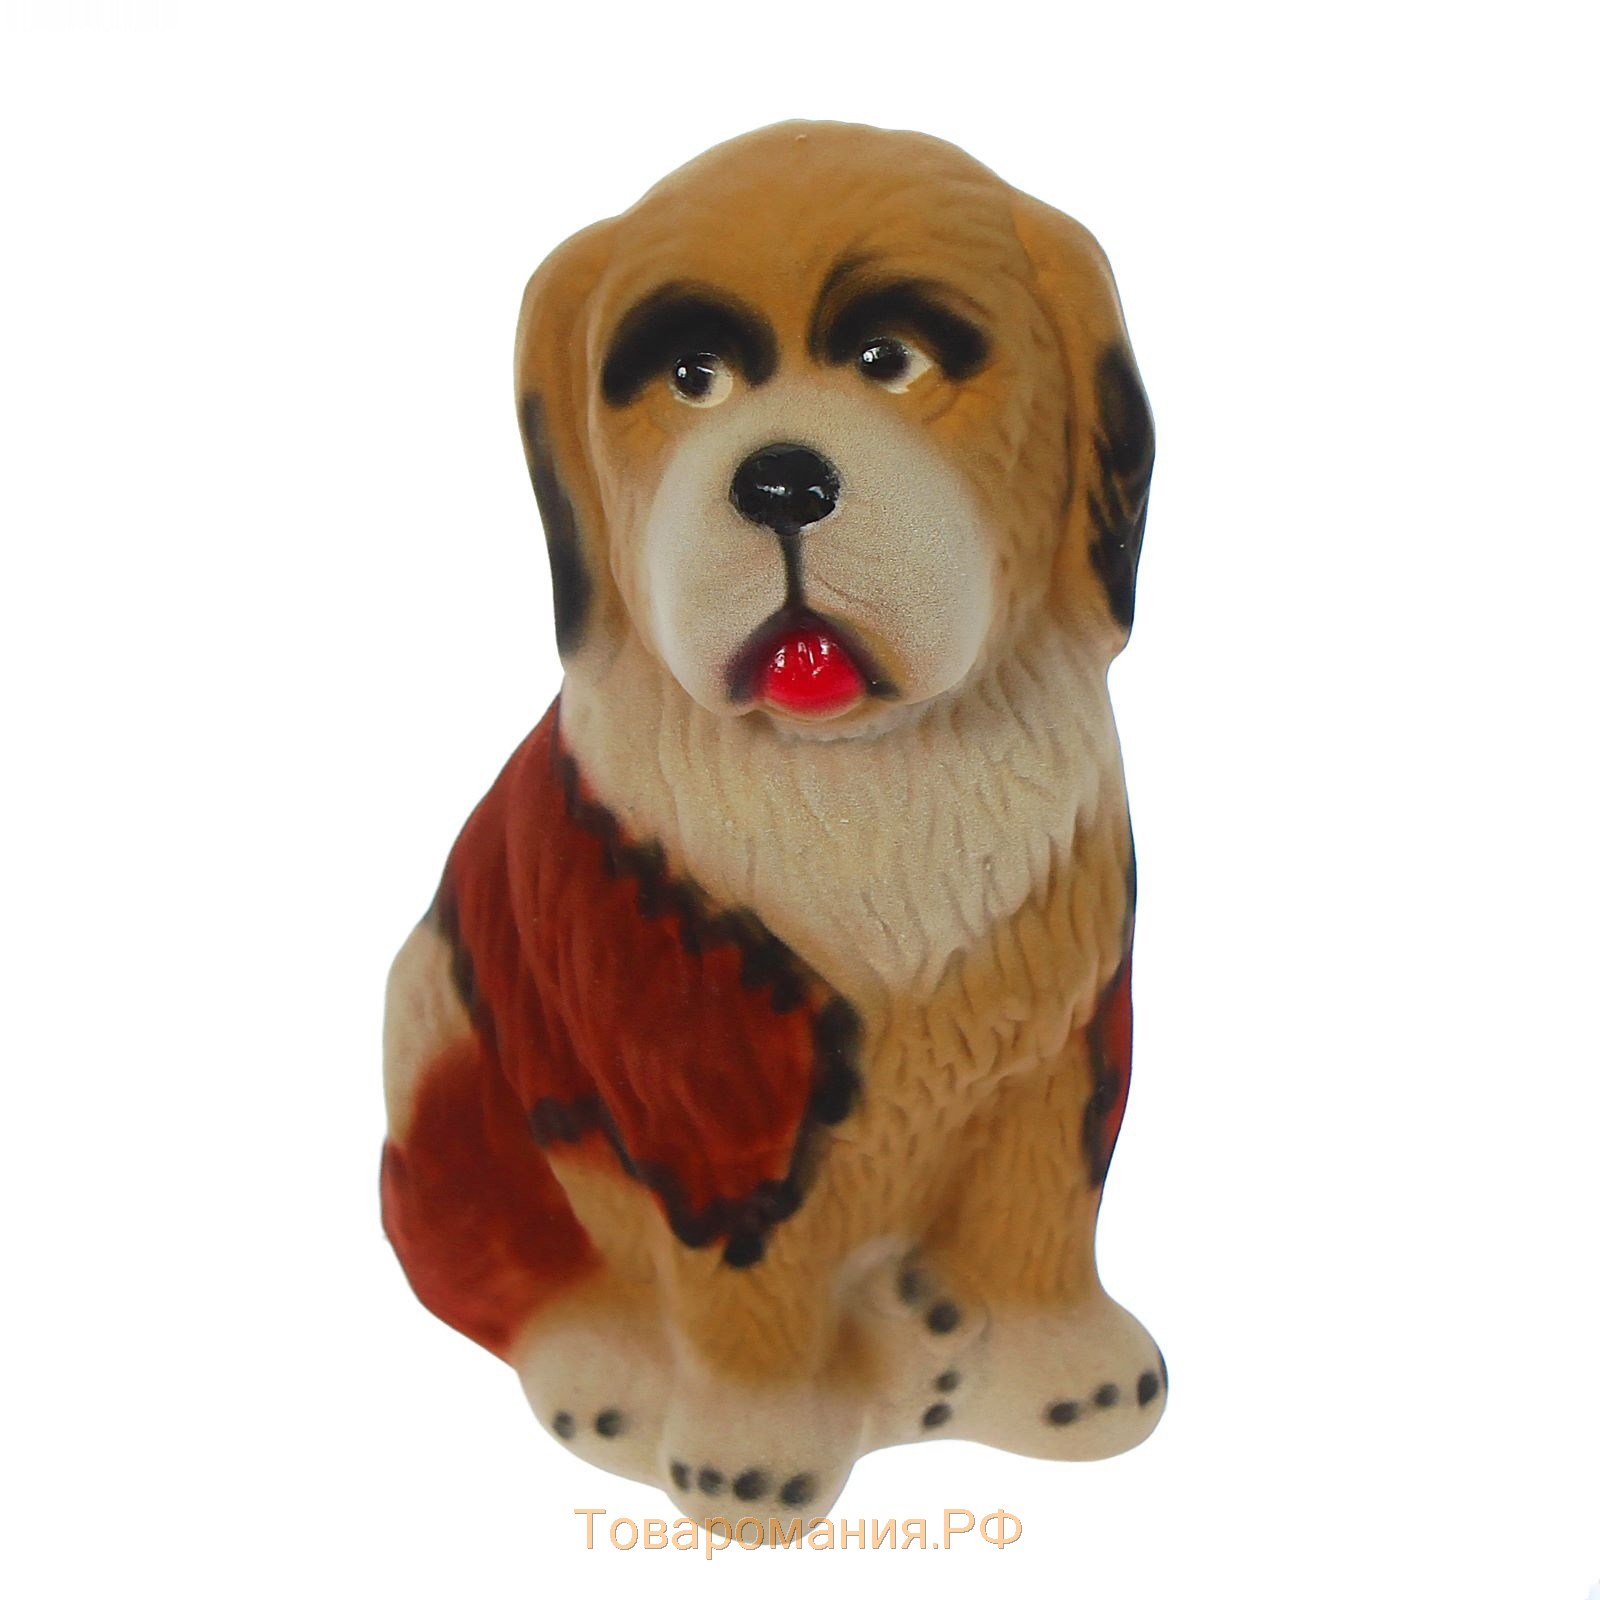 Копилка "Собака Бетховен", коричневый цвет, флок, керамика, 18 см